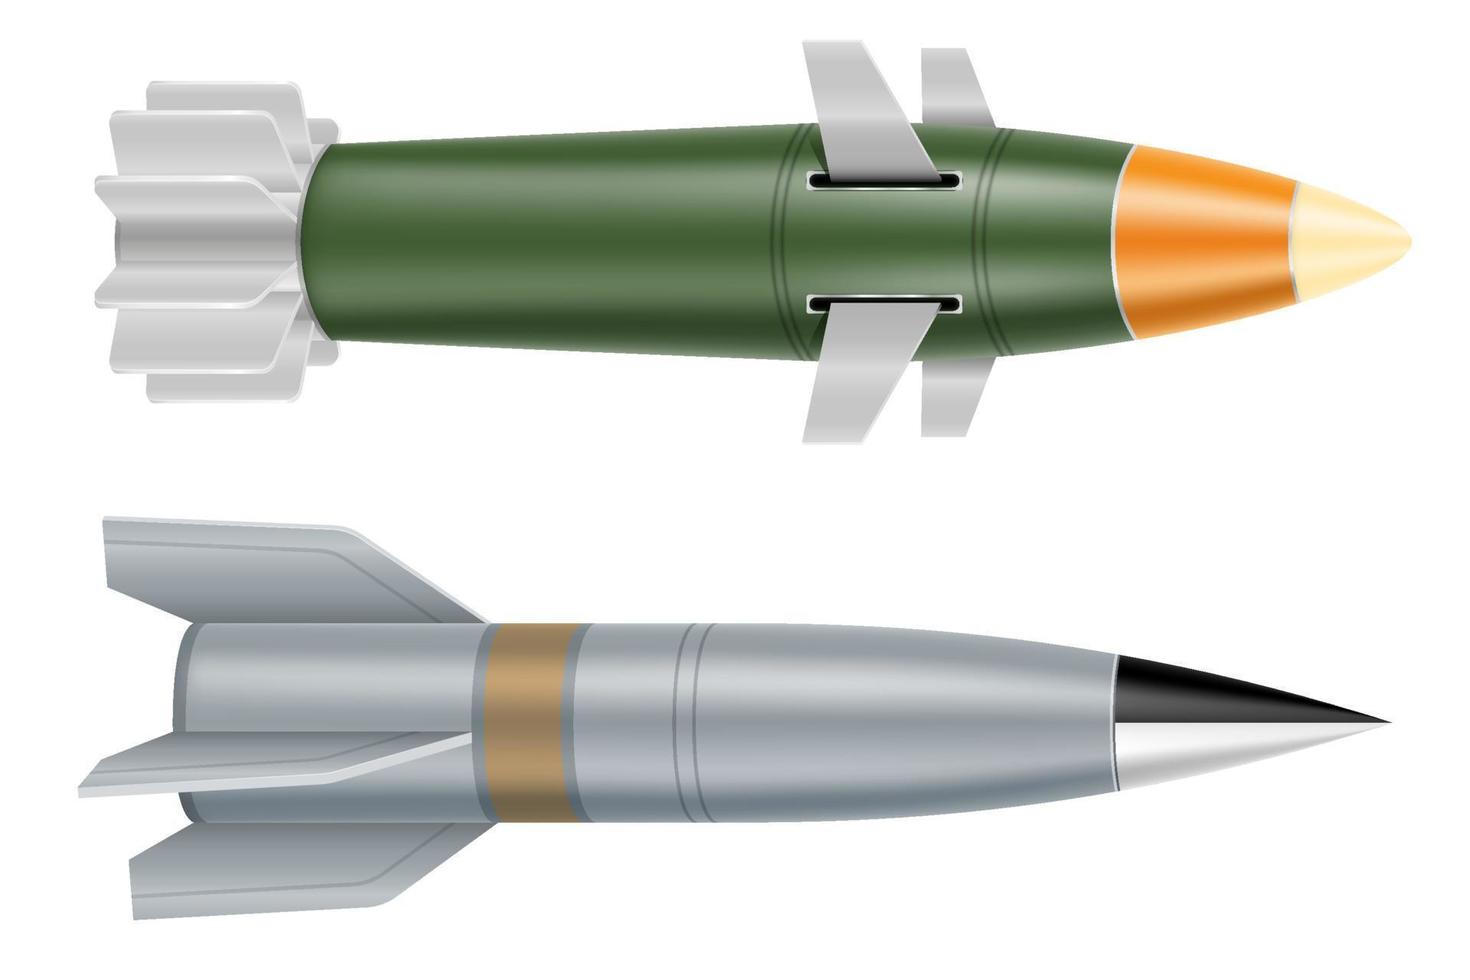 long range ballistic military missile vector illustration isolated on white background